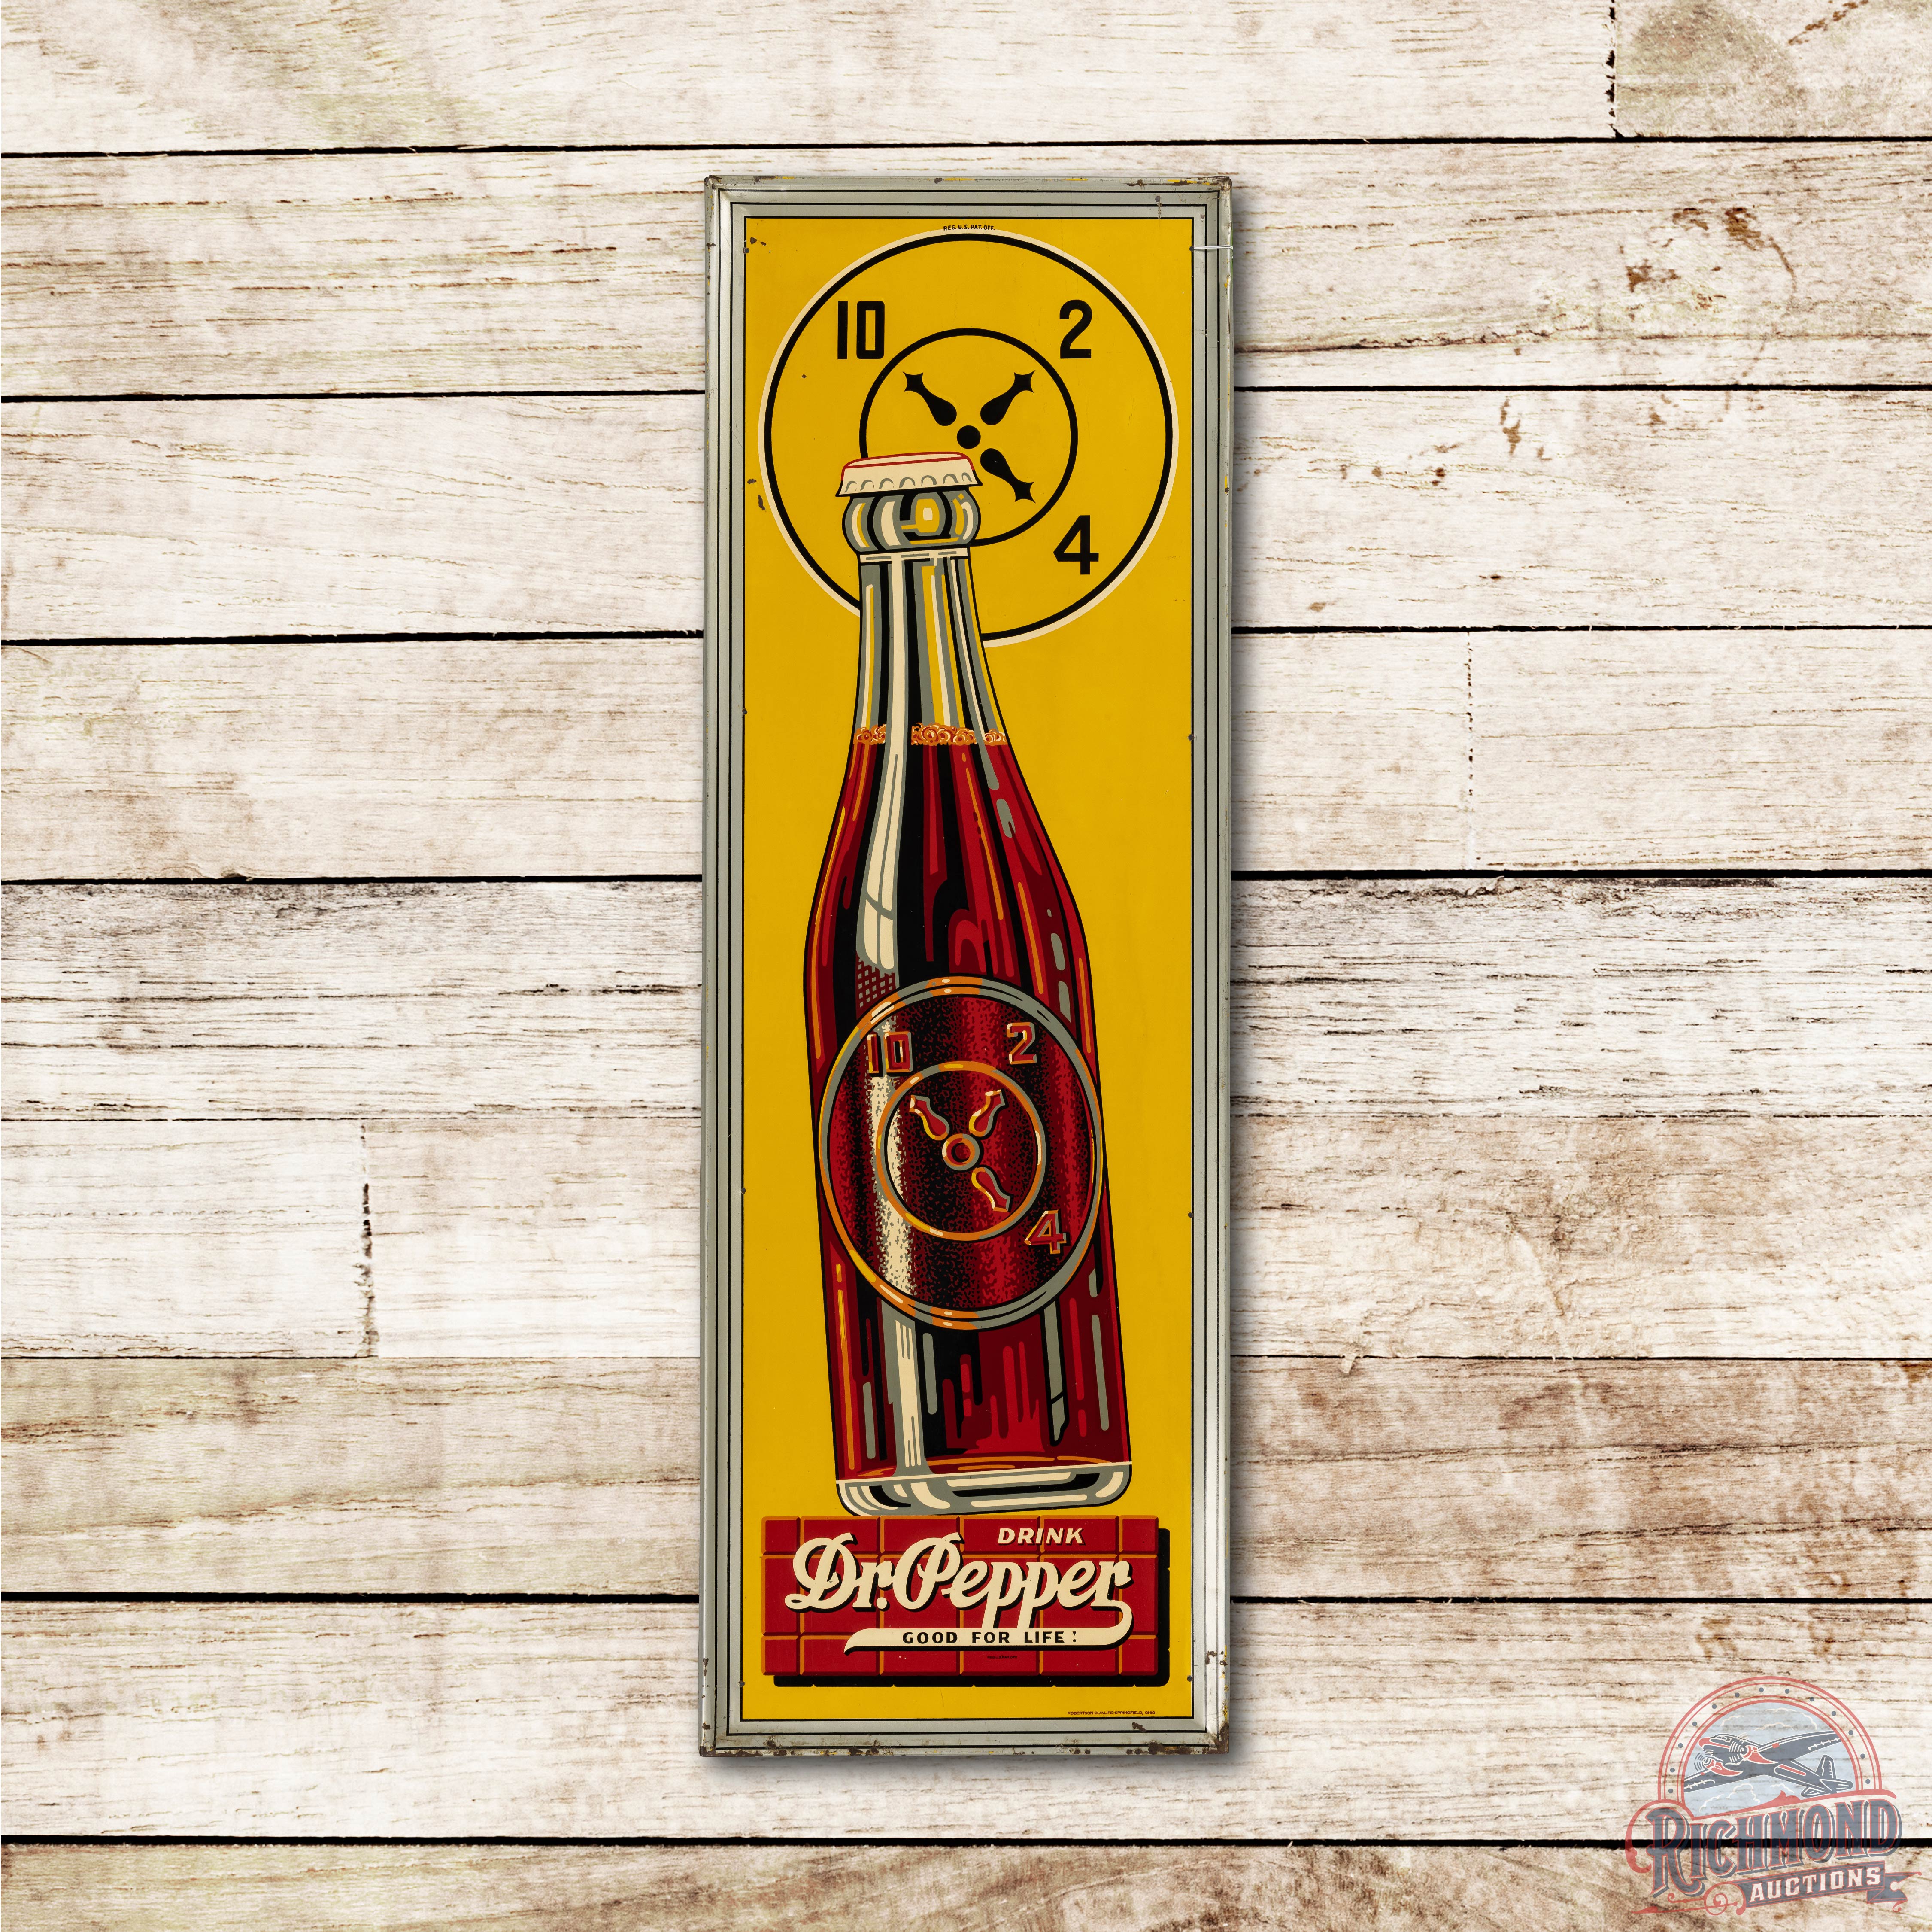 Dr. Pepper 10-2-4 w/ Bottle & Checkerboard Logo Tin Sign